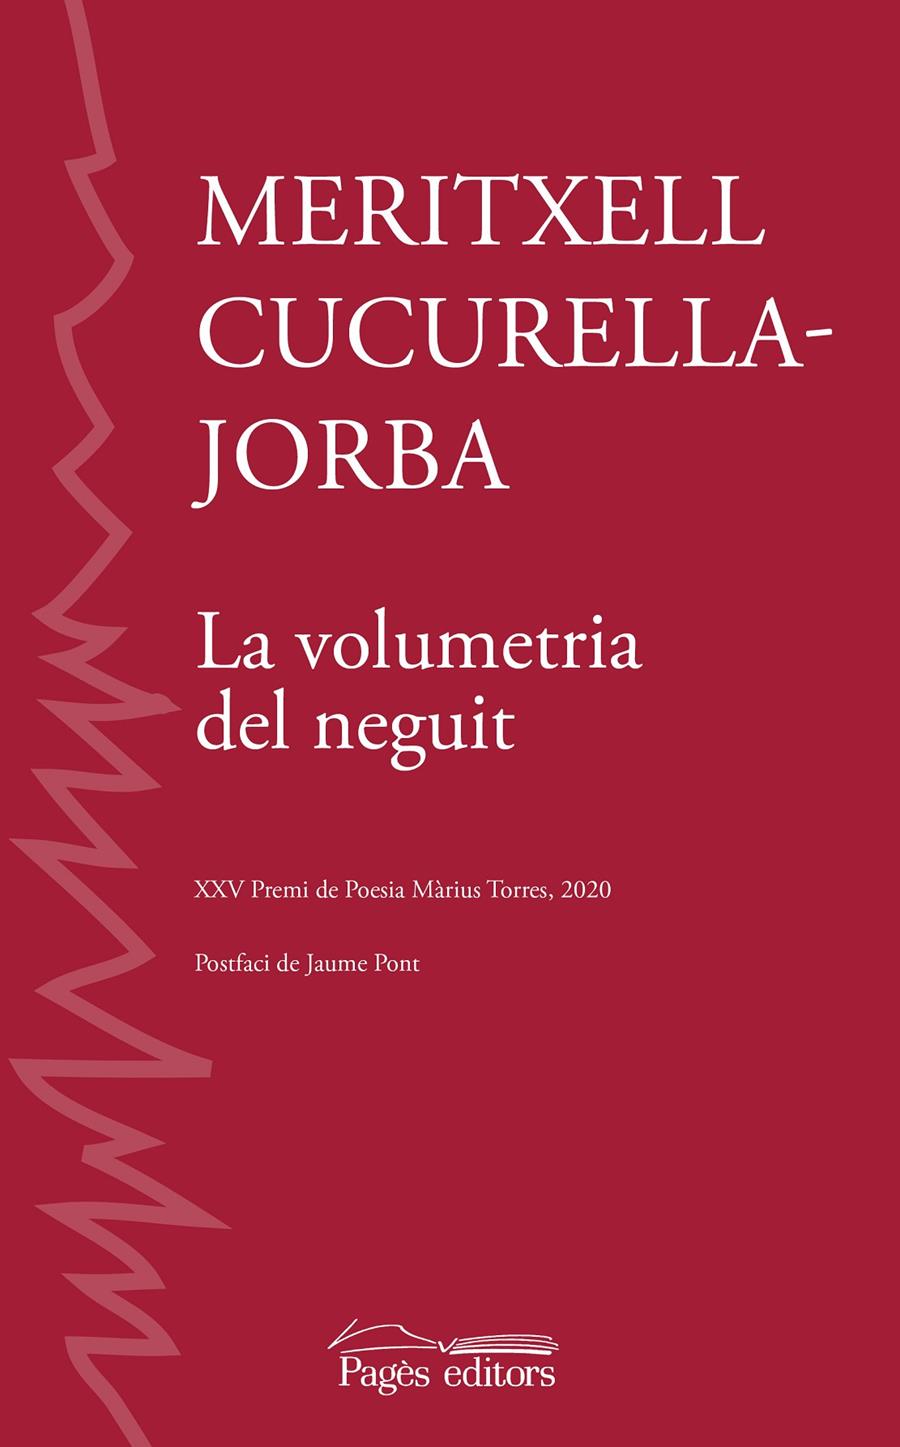 La volumetria del neguit | Cucurella-Jorba, Meritxell